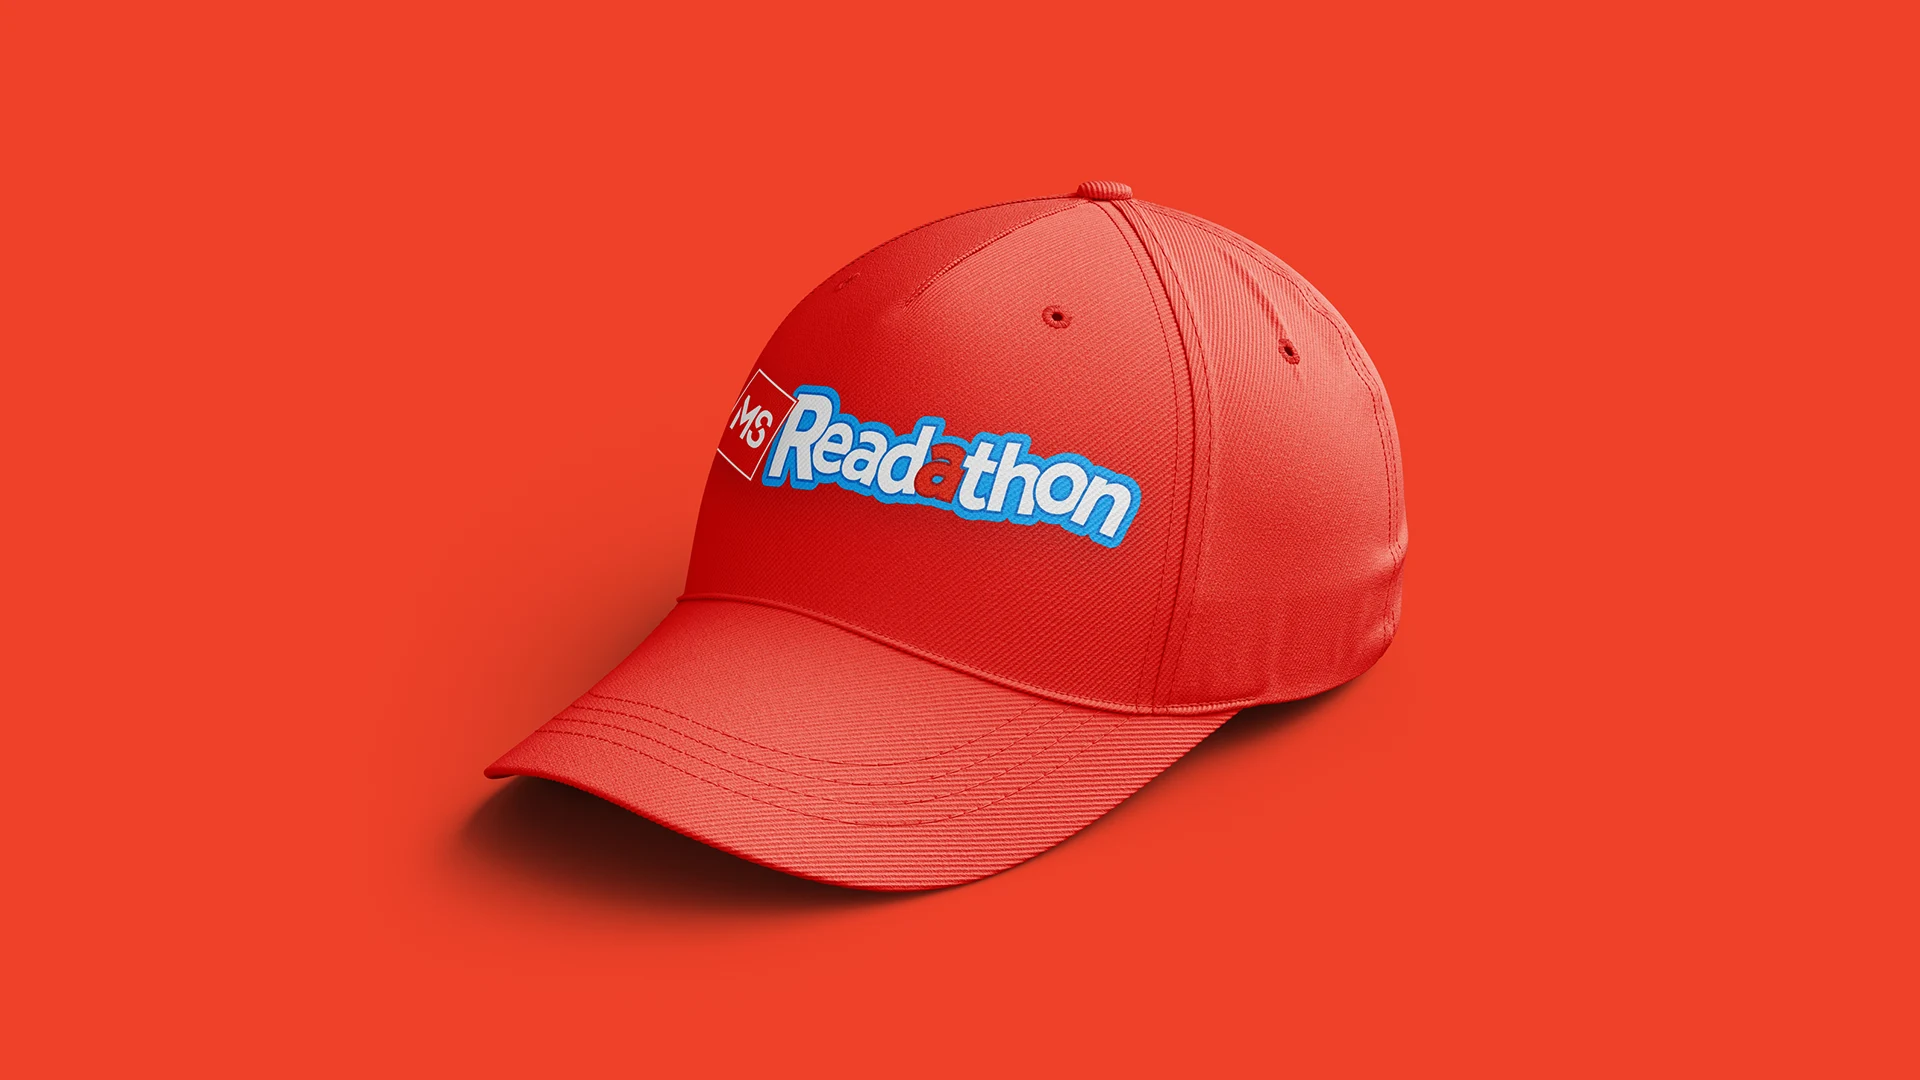 MS Readathon graphic apparel - hats